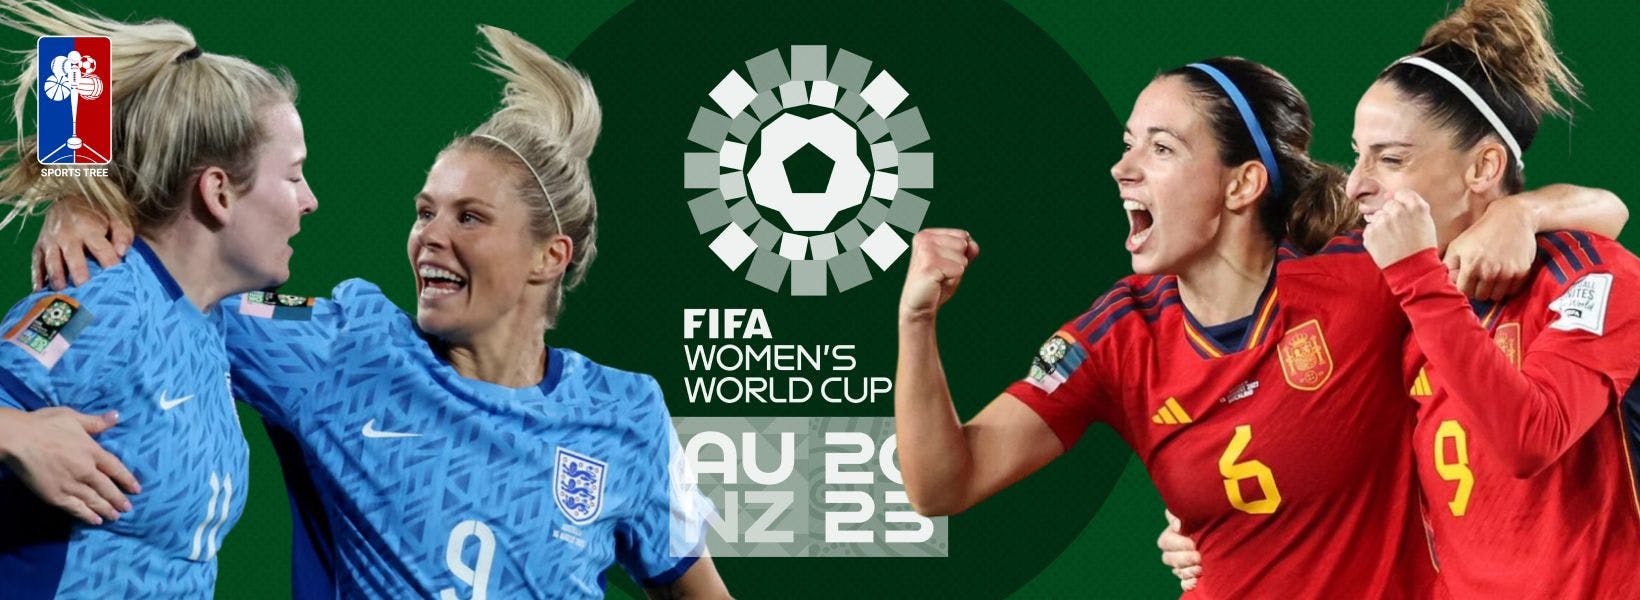 England vs Spain in Women's World Cup final